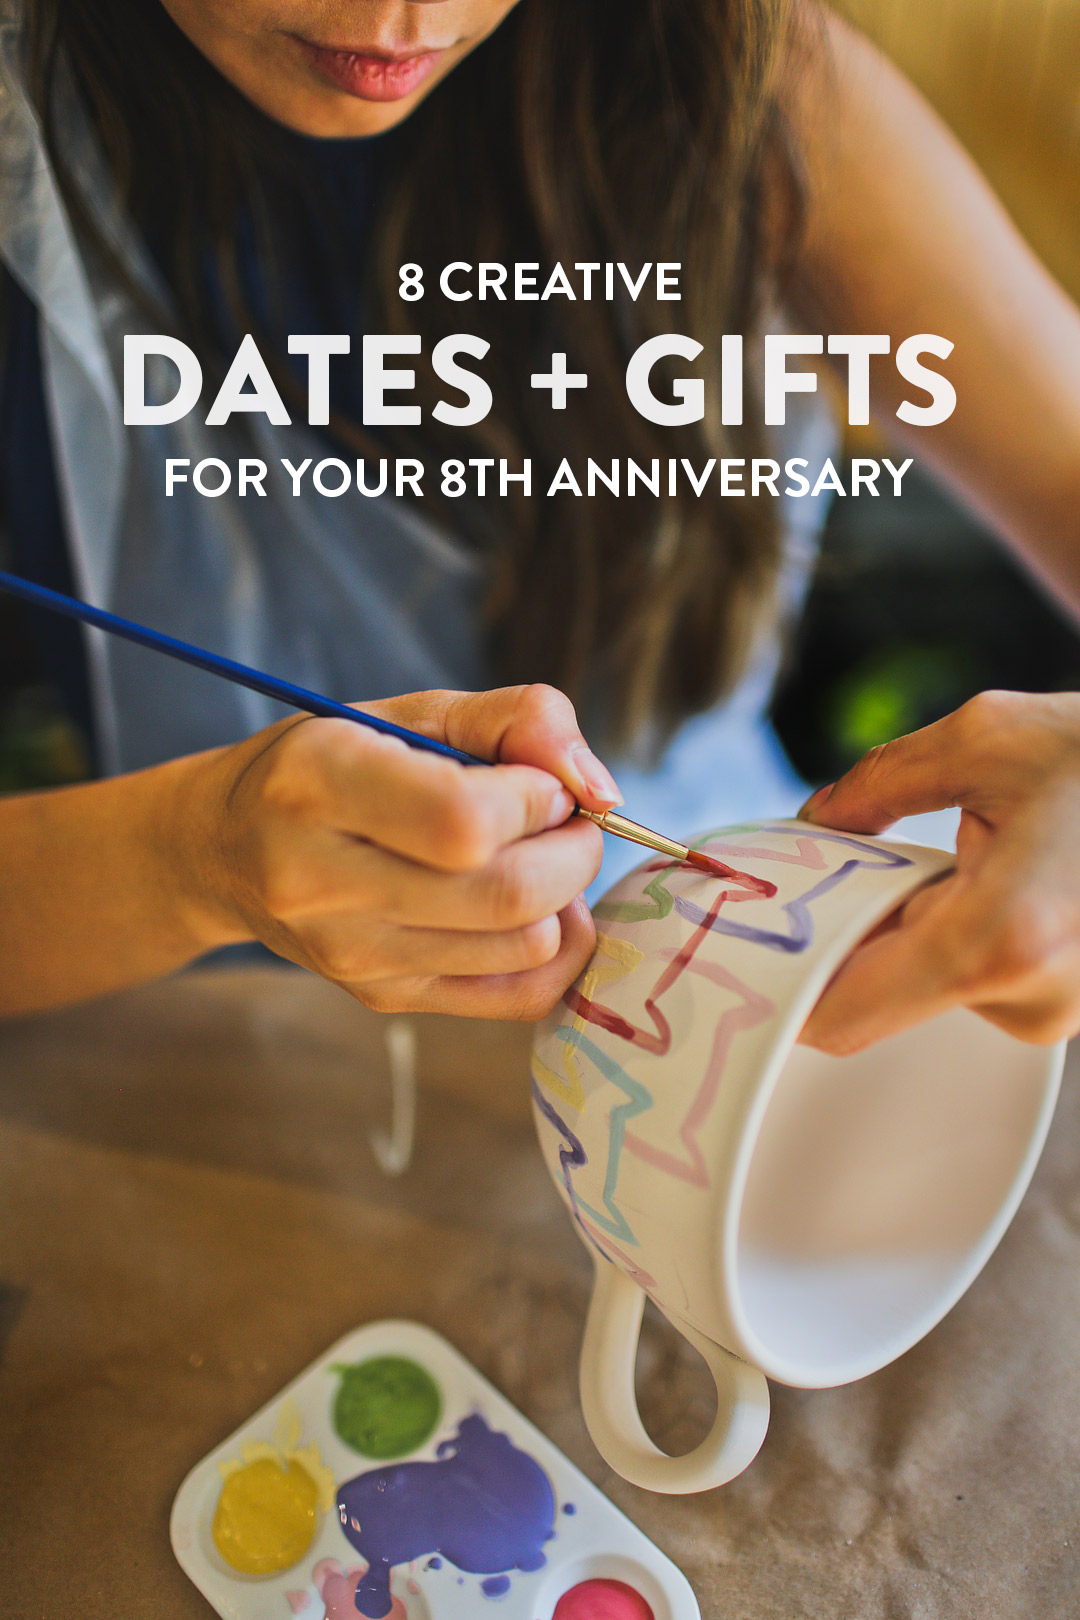 27 Wedding Gift Ideas to Stun Your Newlywed Friends - Craftsy Hacks